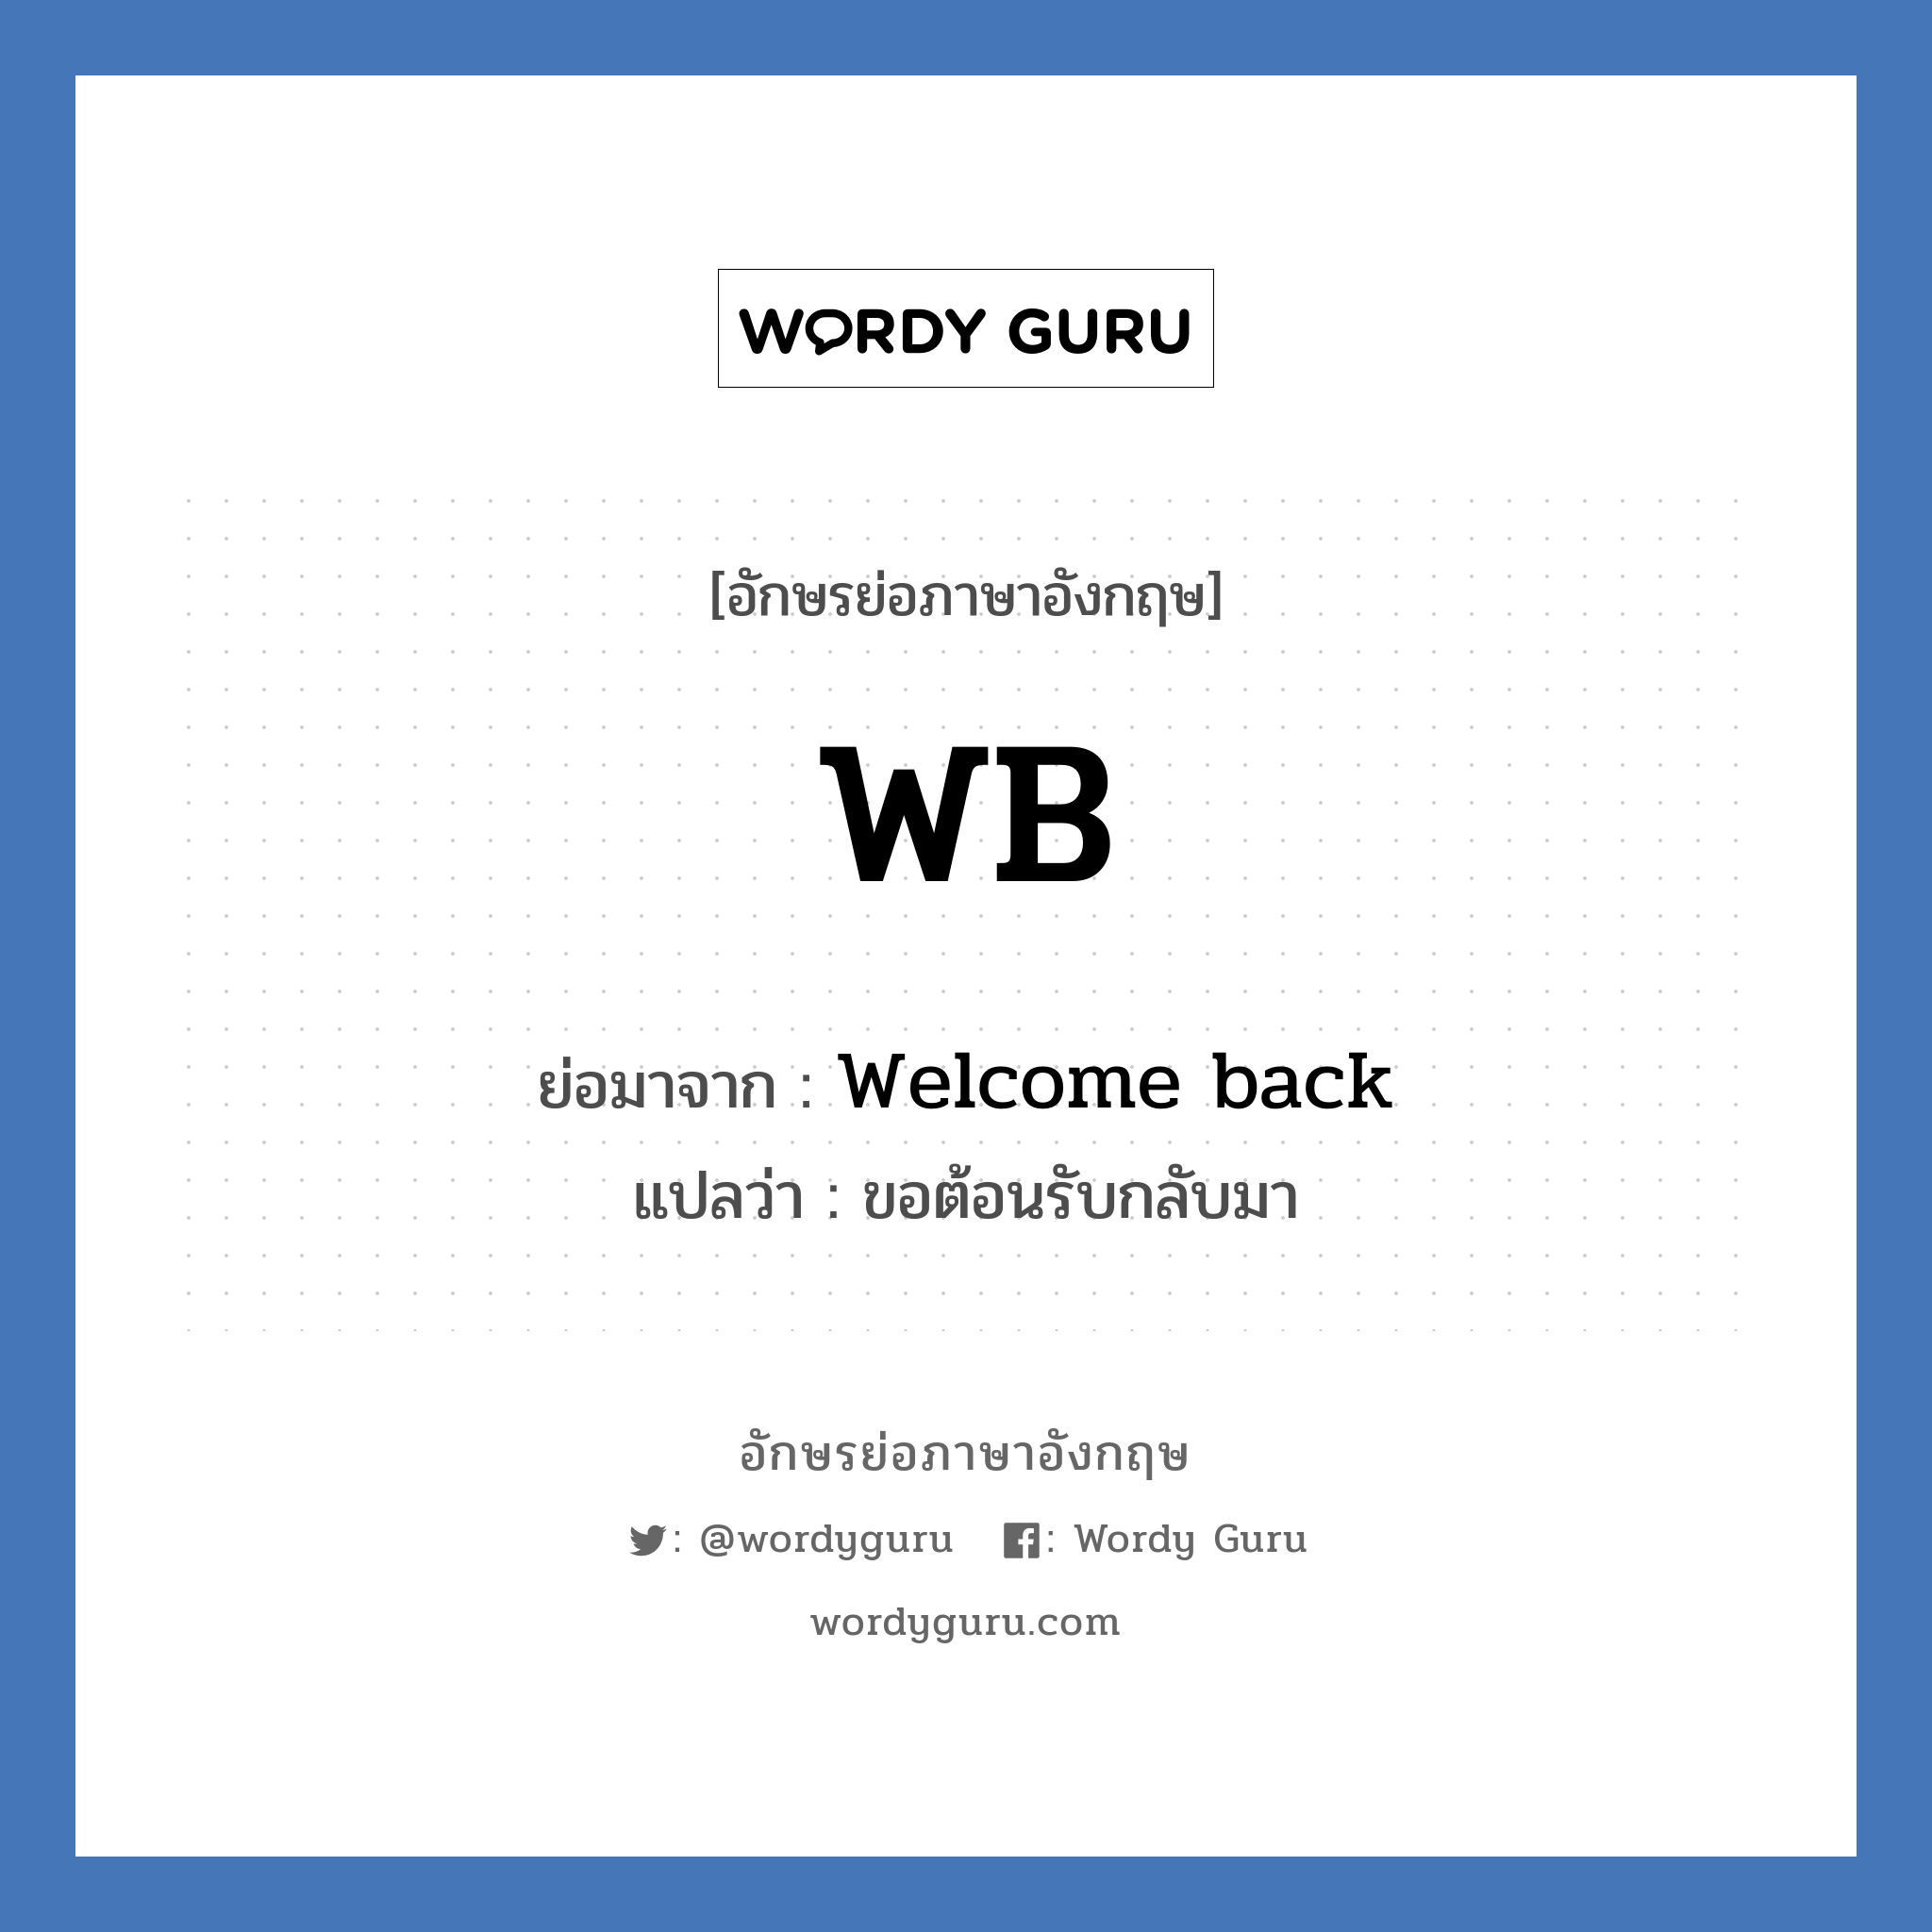 Welcome back คำย่อคือ? แปลว่า?, อักษรย่อภาษาอังกฤษ Welcome back ย่อมาจาก WB แปลว่า ขอต้อนรับกลับมา